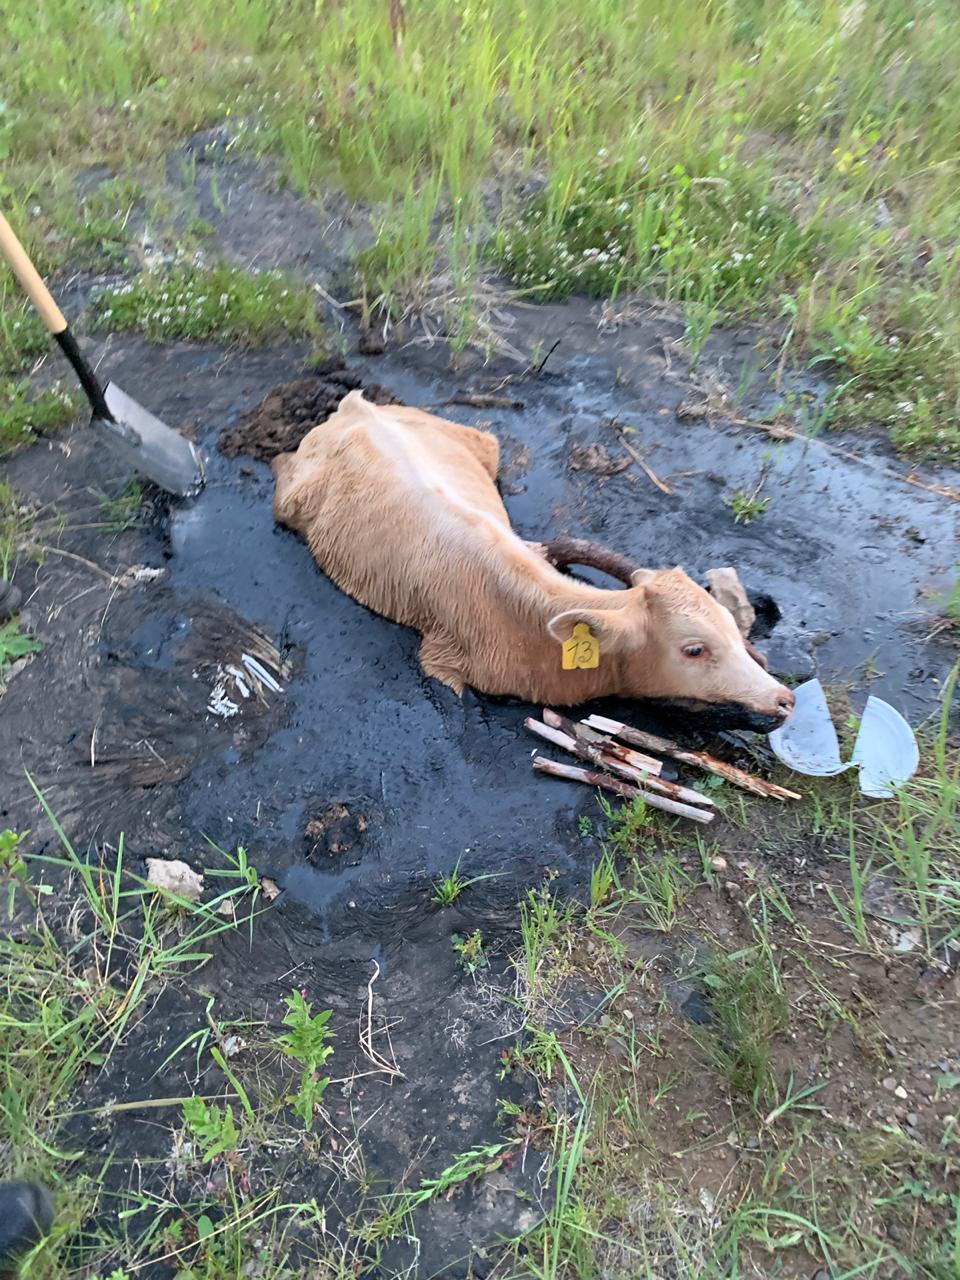 Сотрудники МЧС спасли теленка, который угодил в лужу битума (фото)